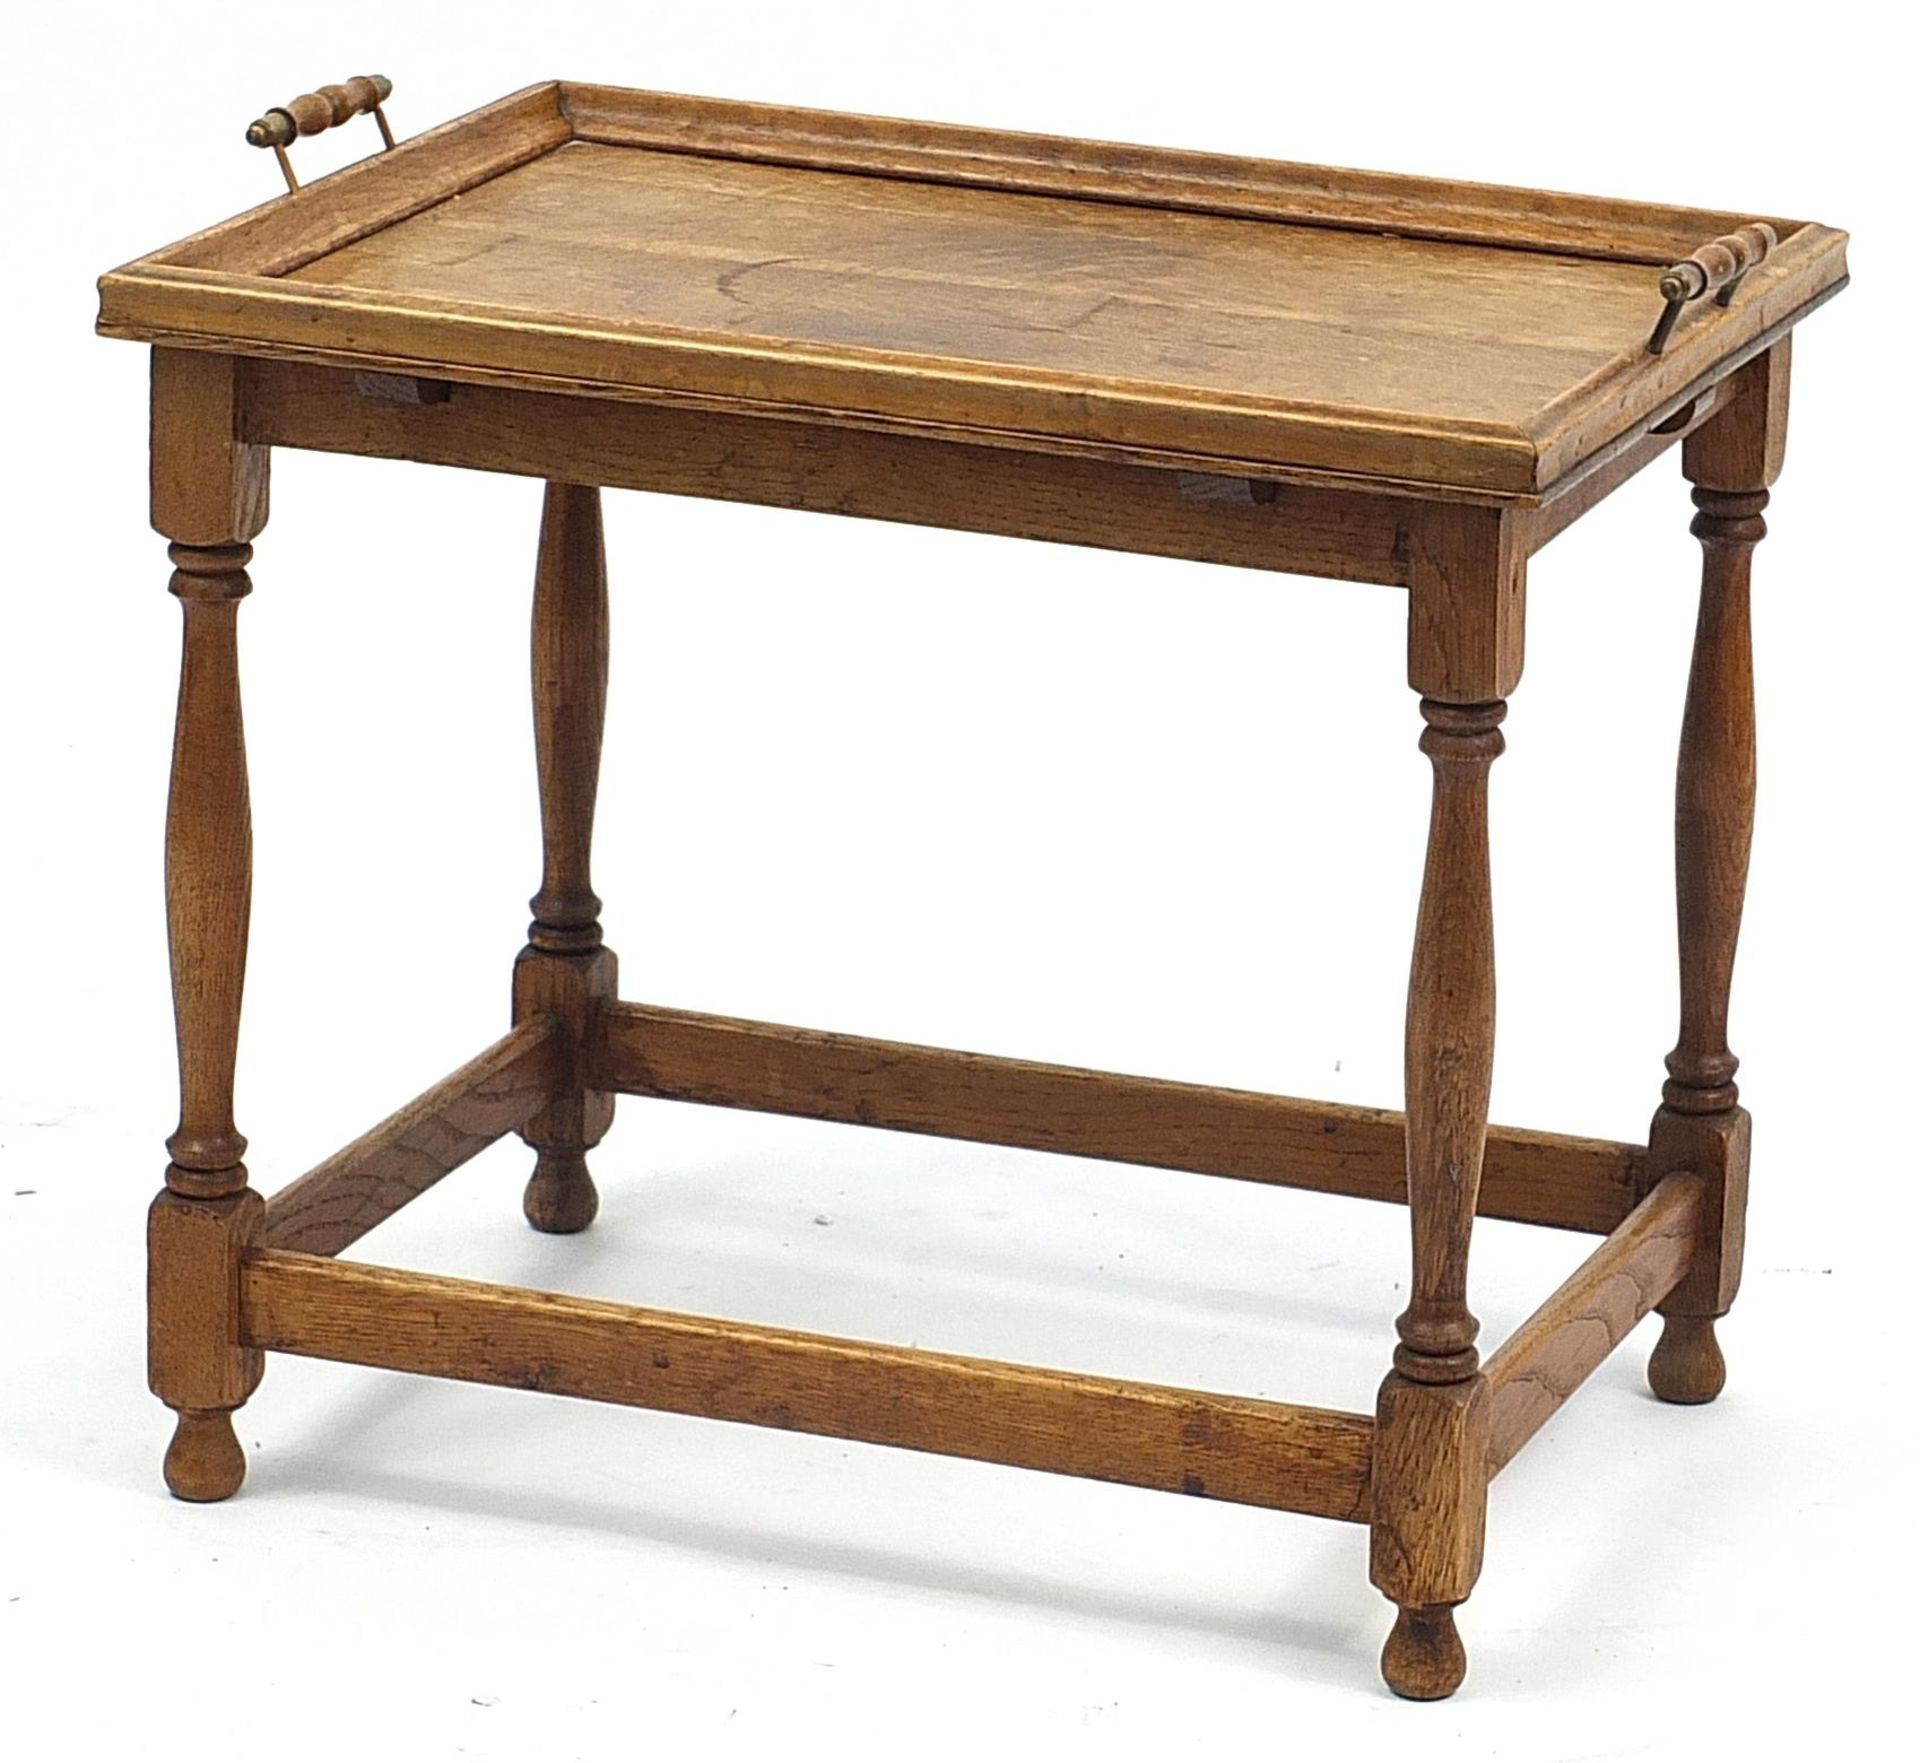 Oak tray table, 48cm H x 53cm W x 38cm D